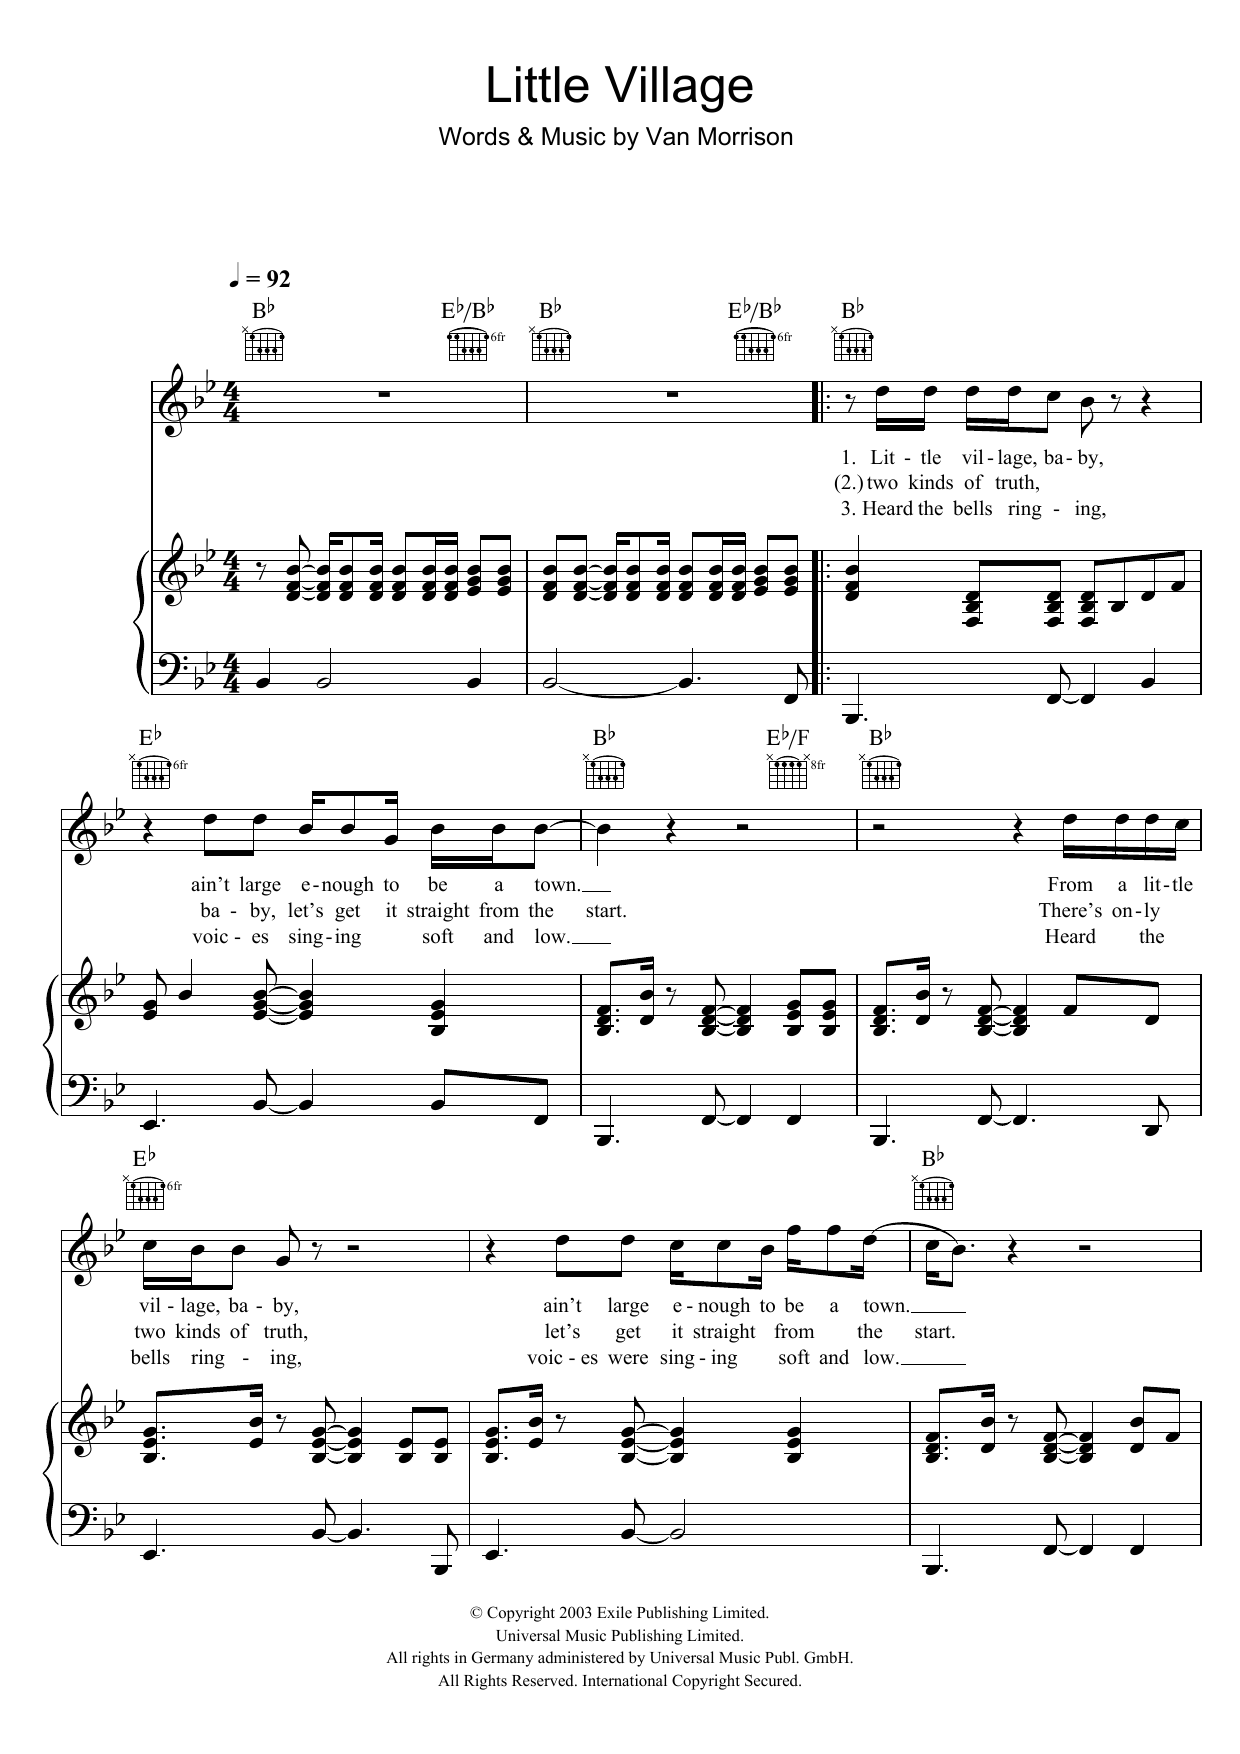 Van Morrison Little Village Sheet Music Notes & Chords for Piano, Vocal & Guitar - Download or Print PDF